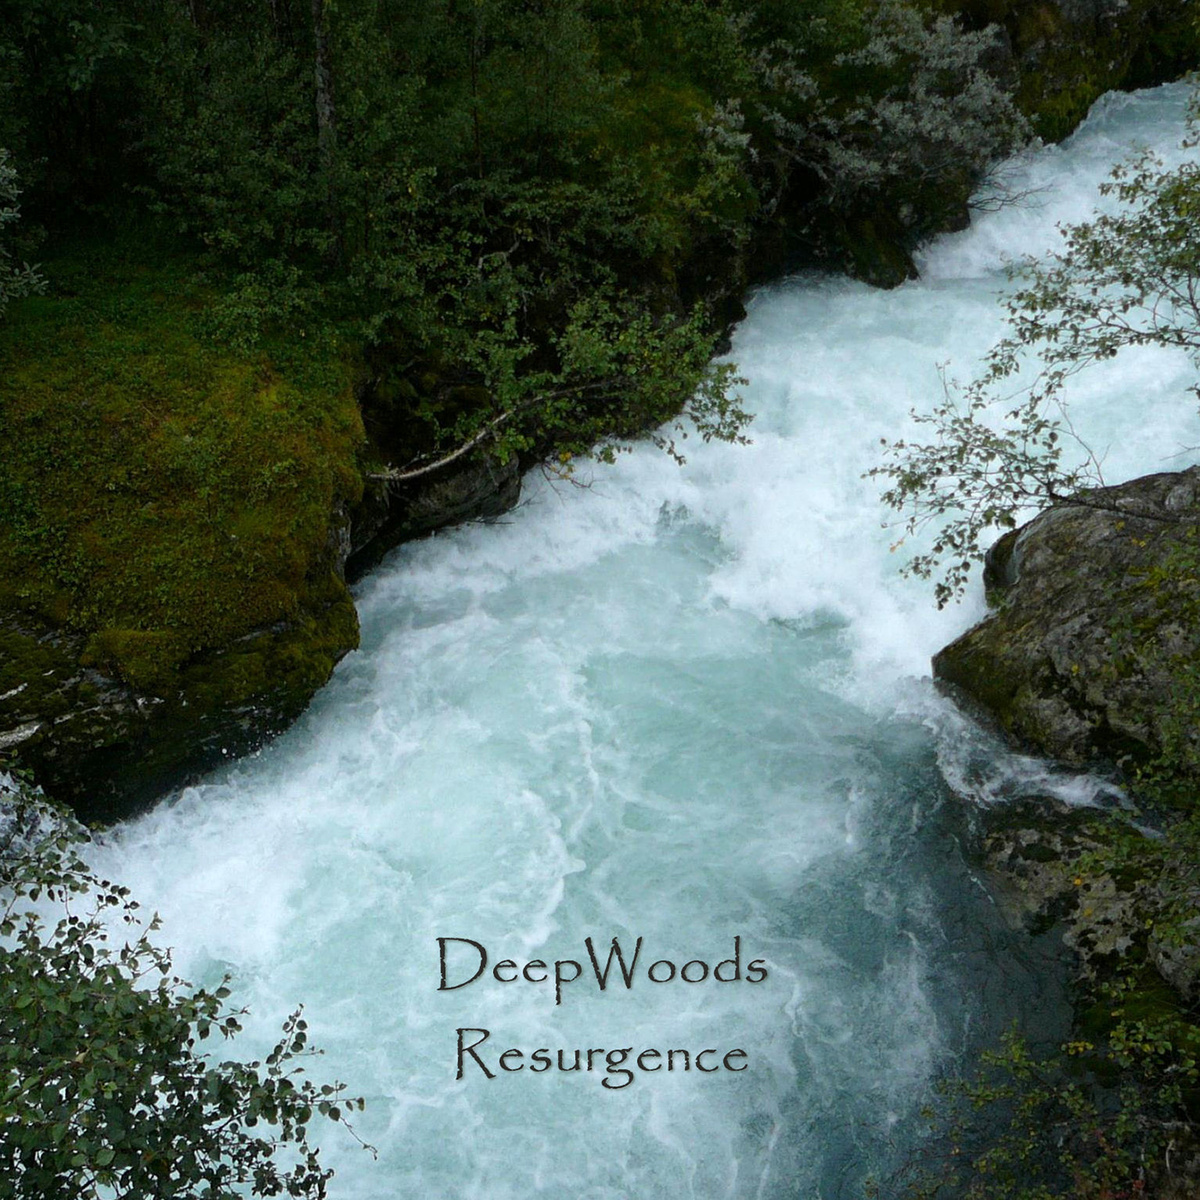 image cover: Deepwoods - Resurgence [CTR060]